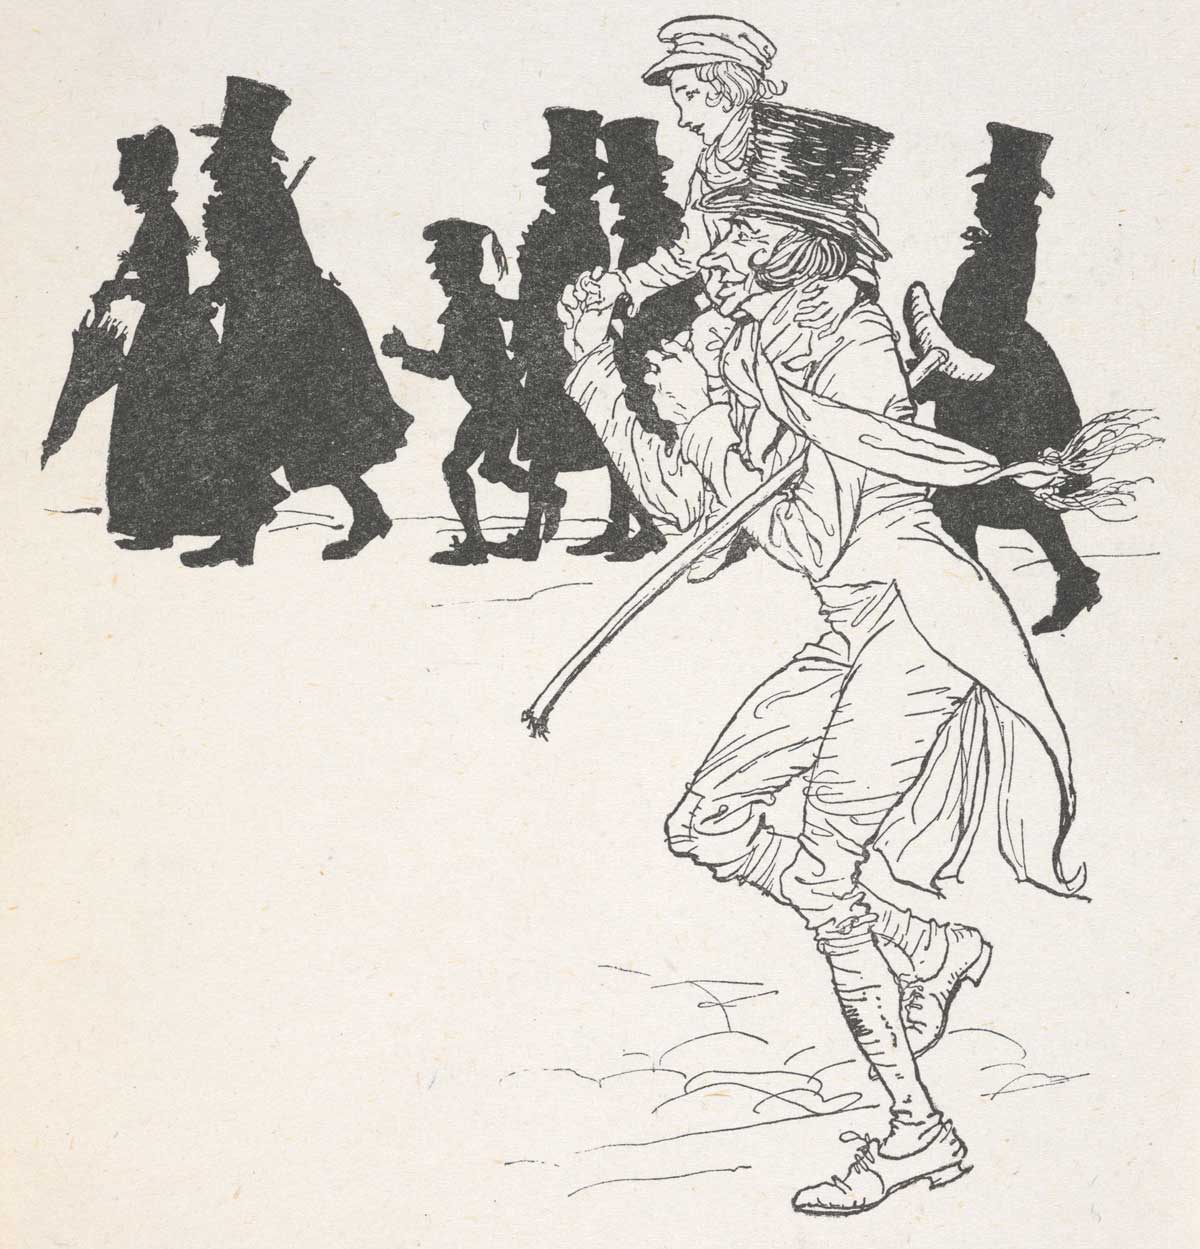 Charles Dickens ‘A Christmas Carol’ Illustrated by Arthur Rackham